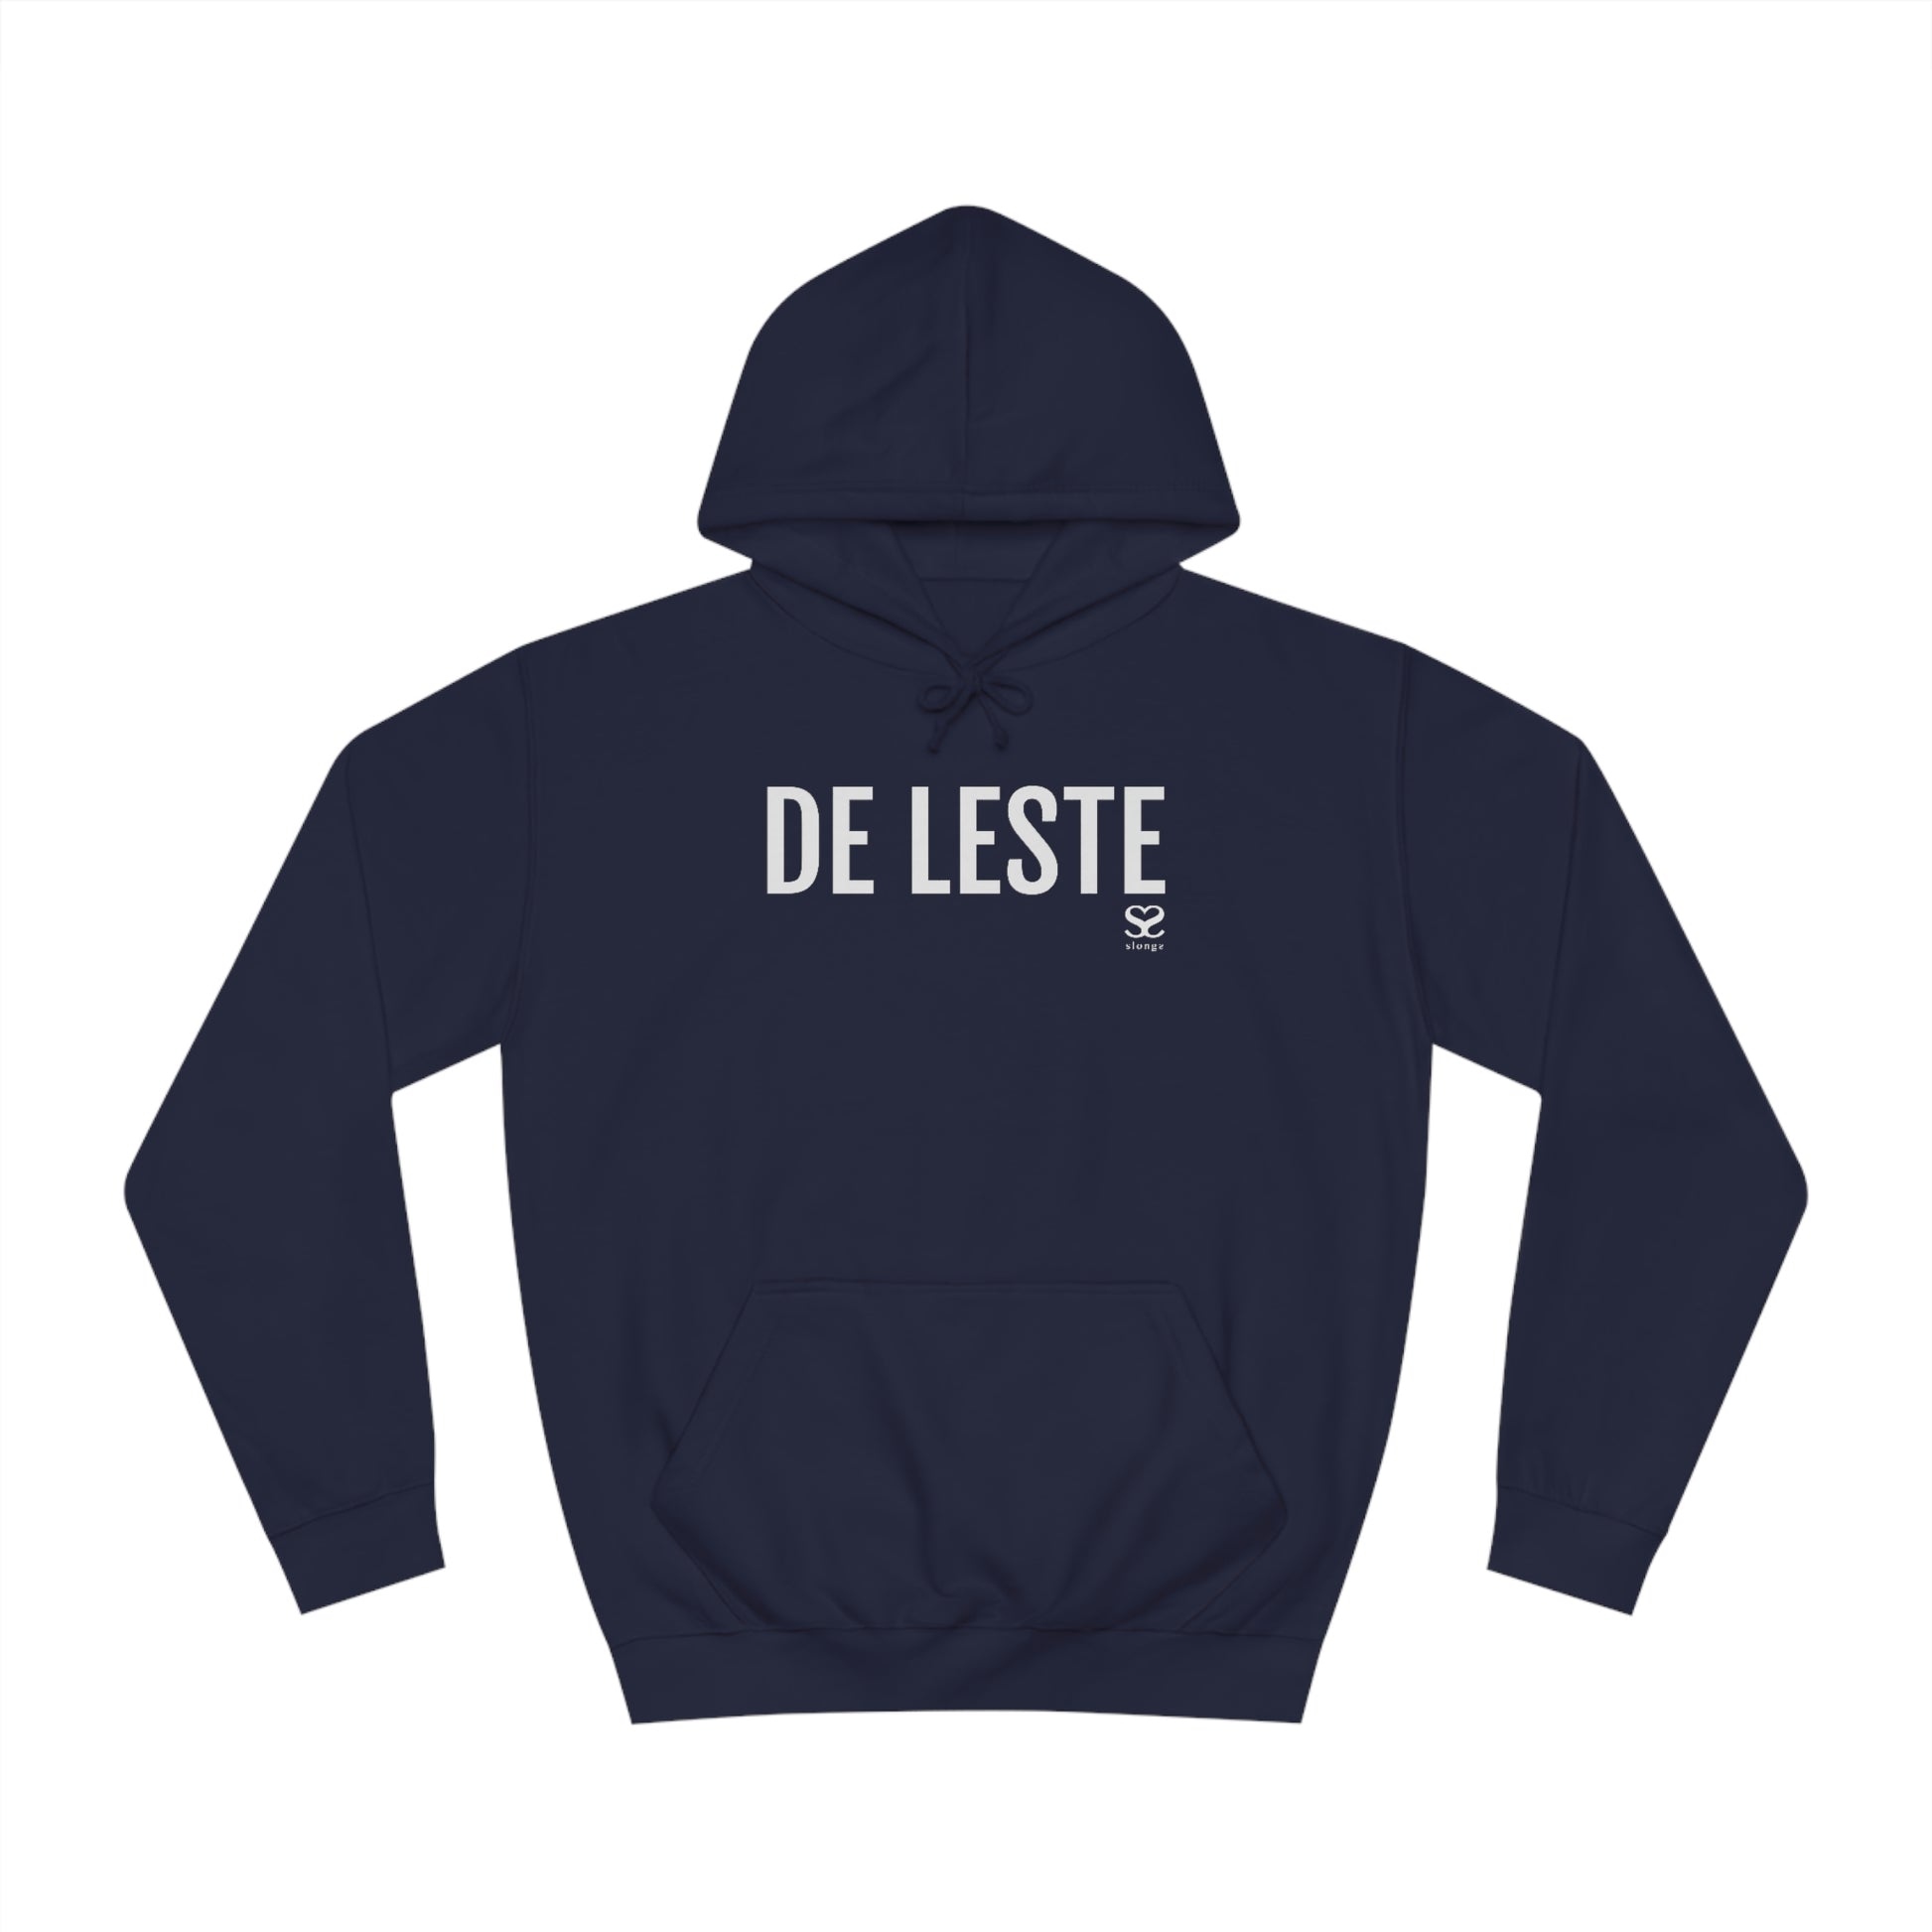 DE LESTE Design Hoodie - Unisex - Marine blauw - Antwerpse Dialect kleding